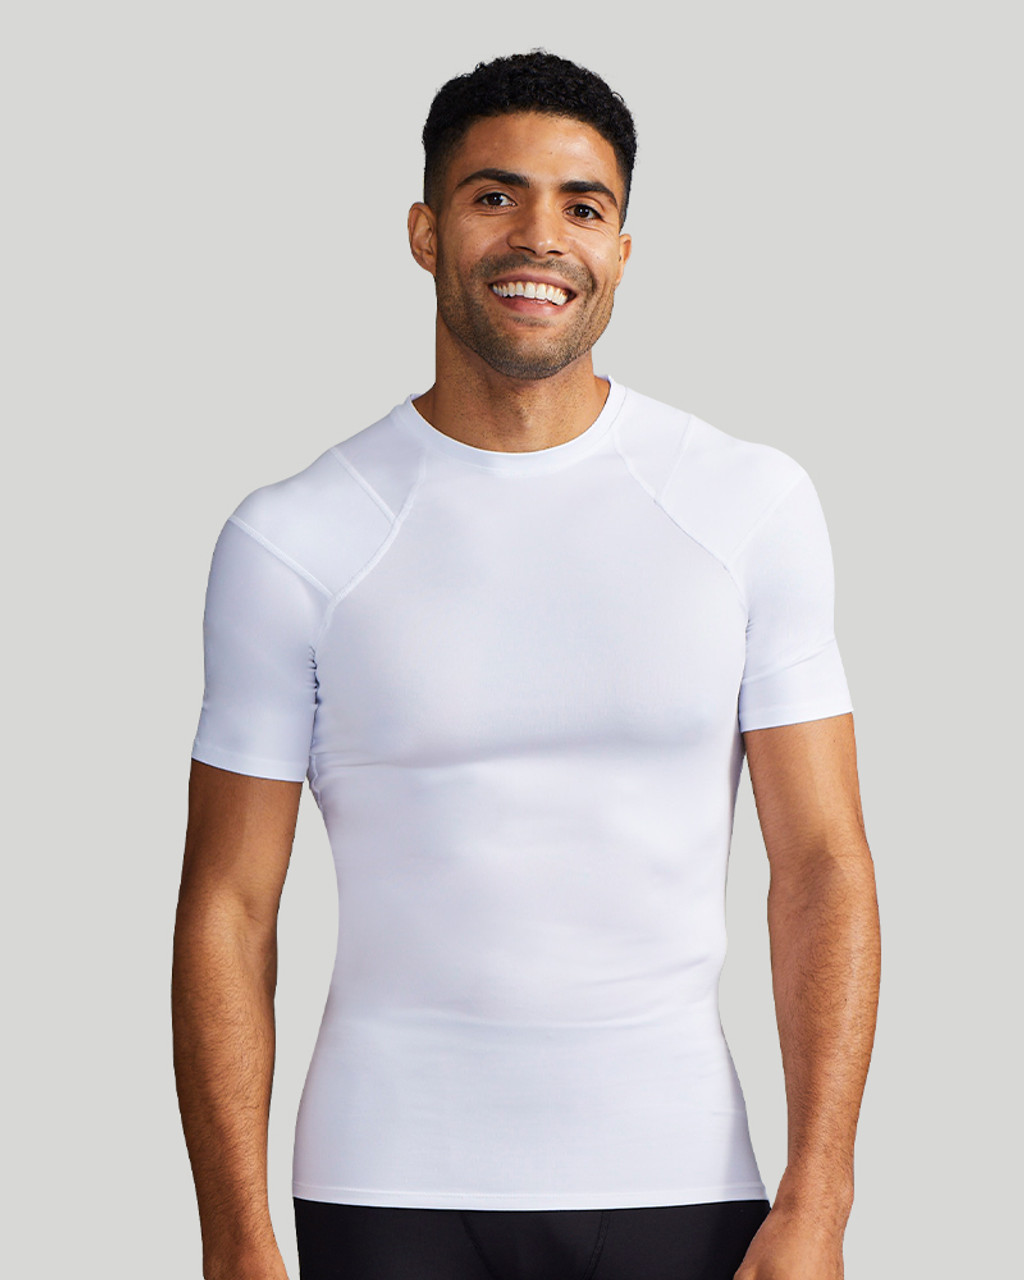  Tommie Copper Shoulder Support Shirt for Men, Posture Corrector Compression  Shirts for Men with UPF 50 Sun Protection, Shoulder Compression with  Shoulder Support for Men, Black S : Clothing, Shoes 